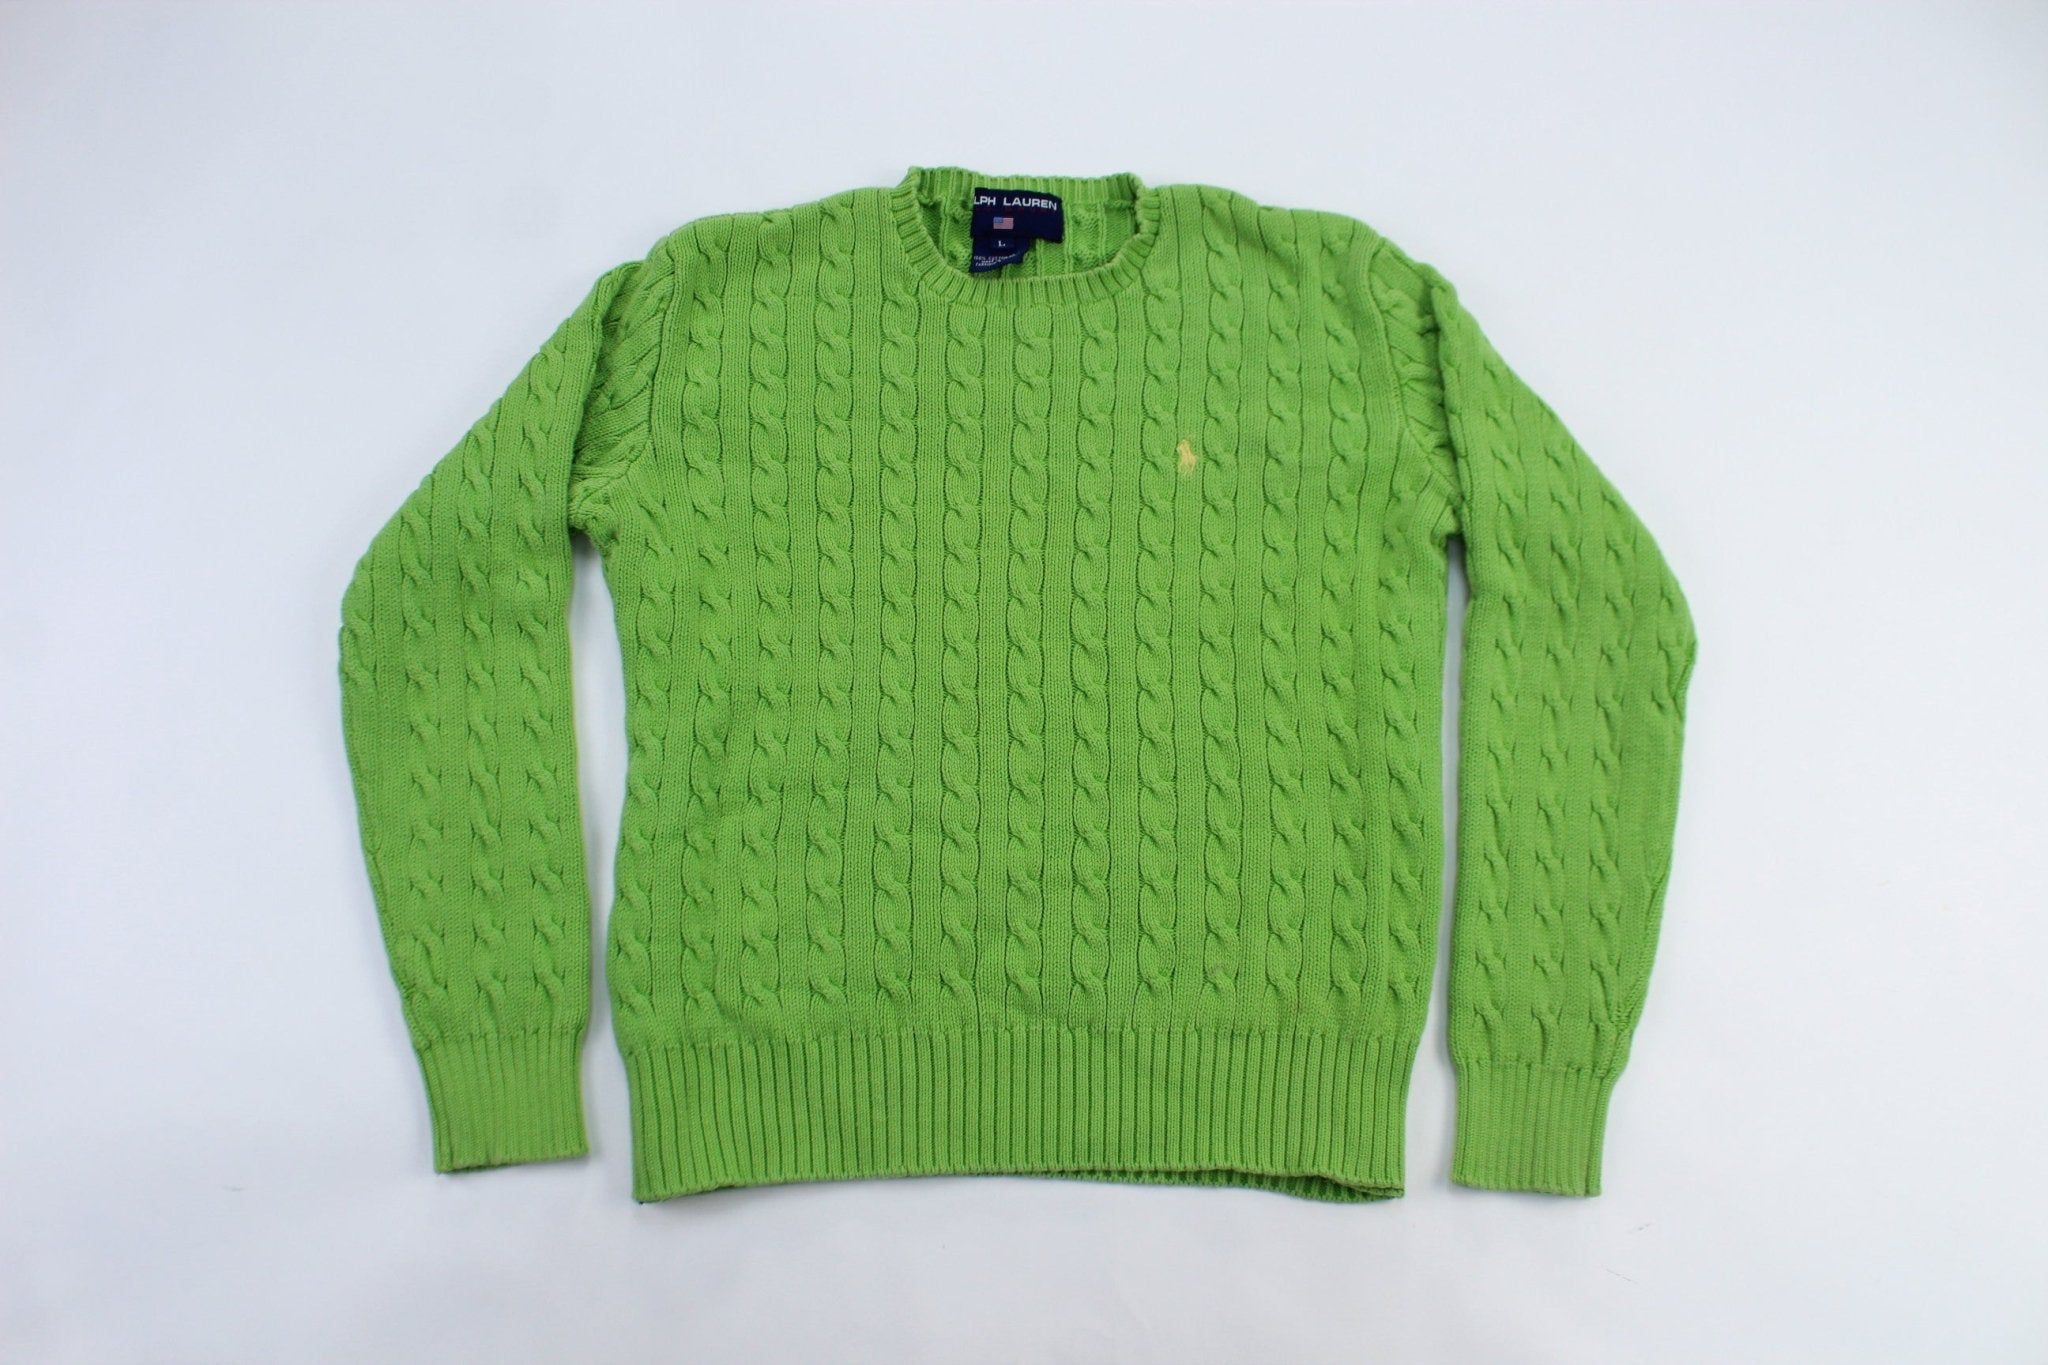 Polo by Ralph Lauren Lime Green Knit Sweater - ThriftedThreads.com